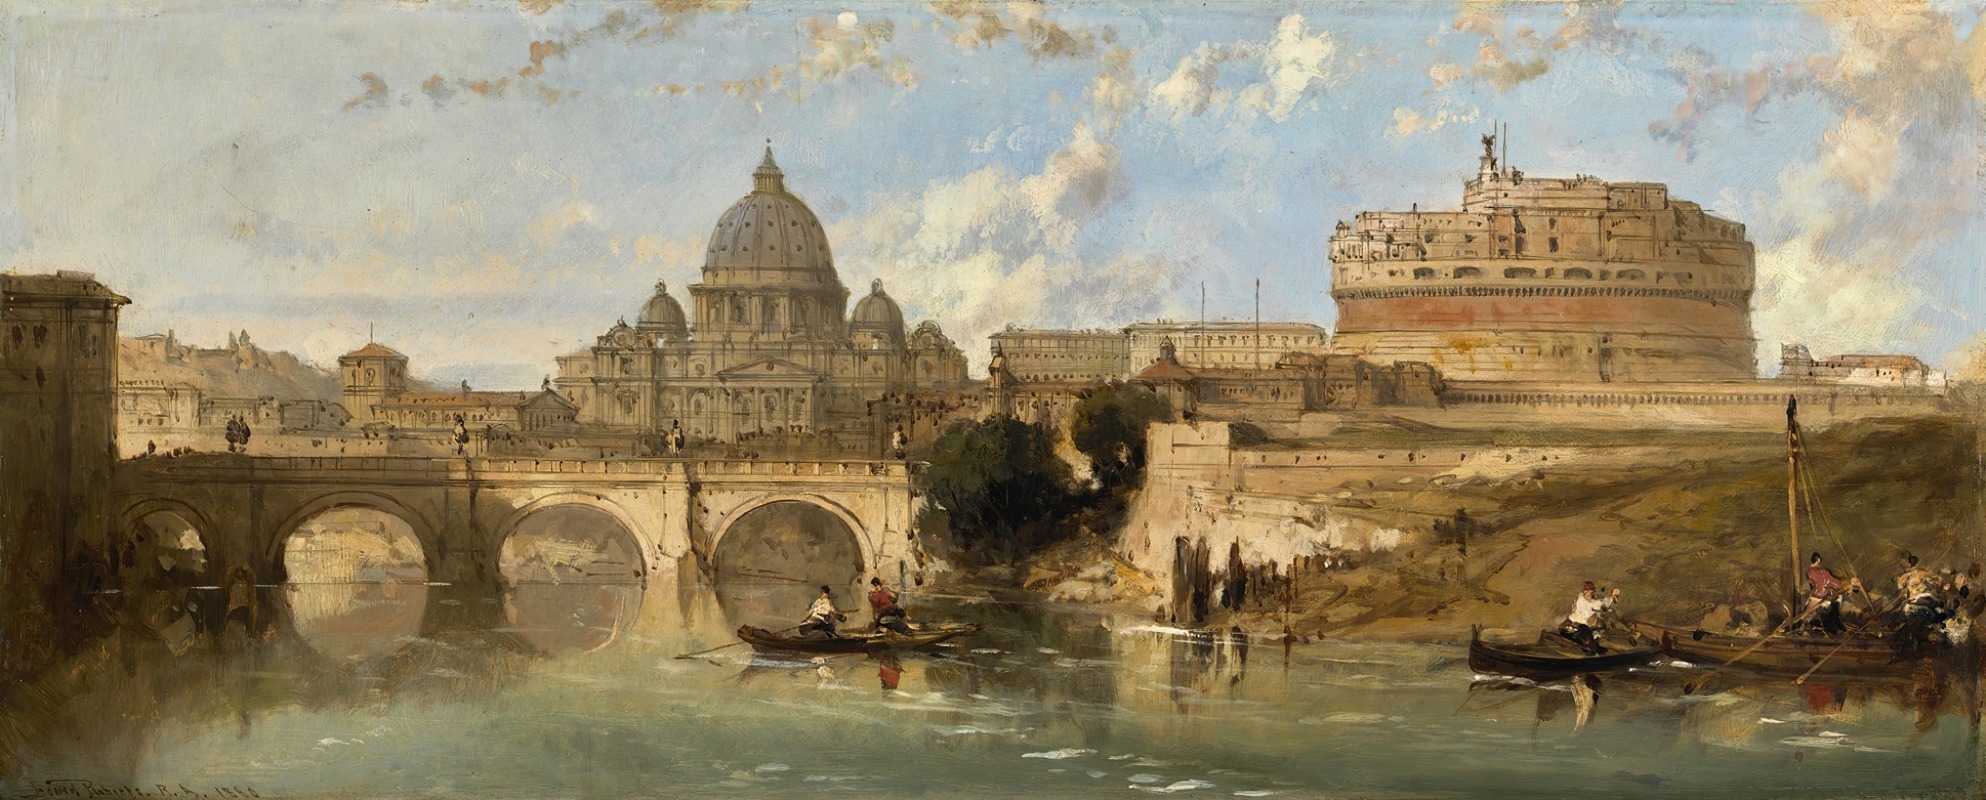 David Roberts - Castle And Bridge Of St. Angelo, Rome